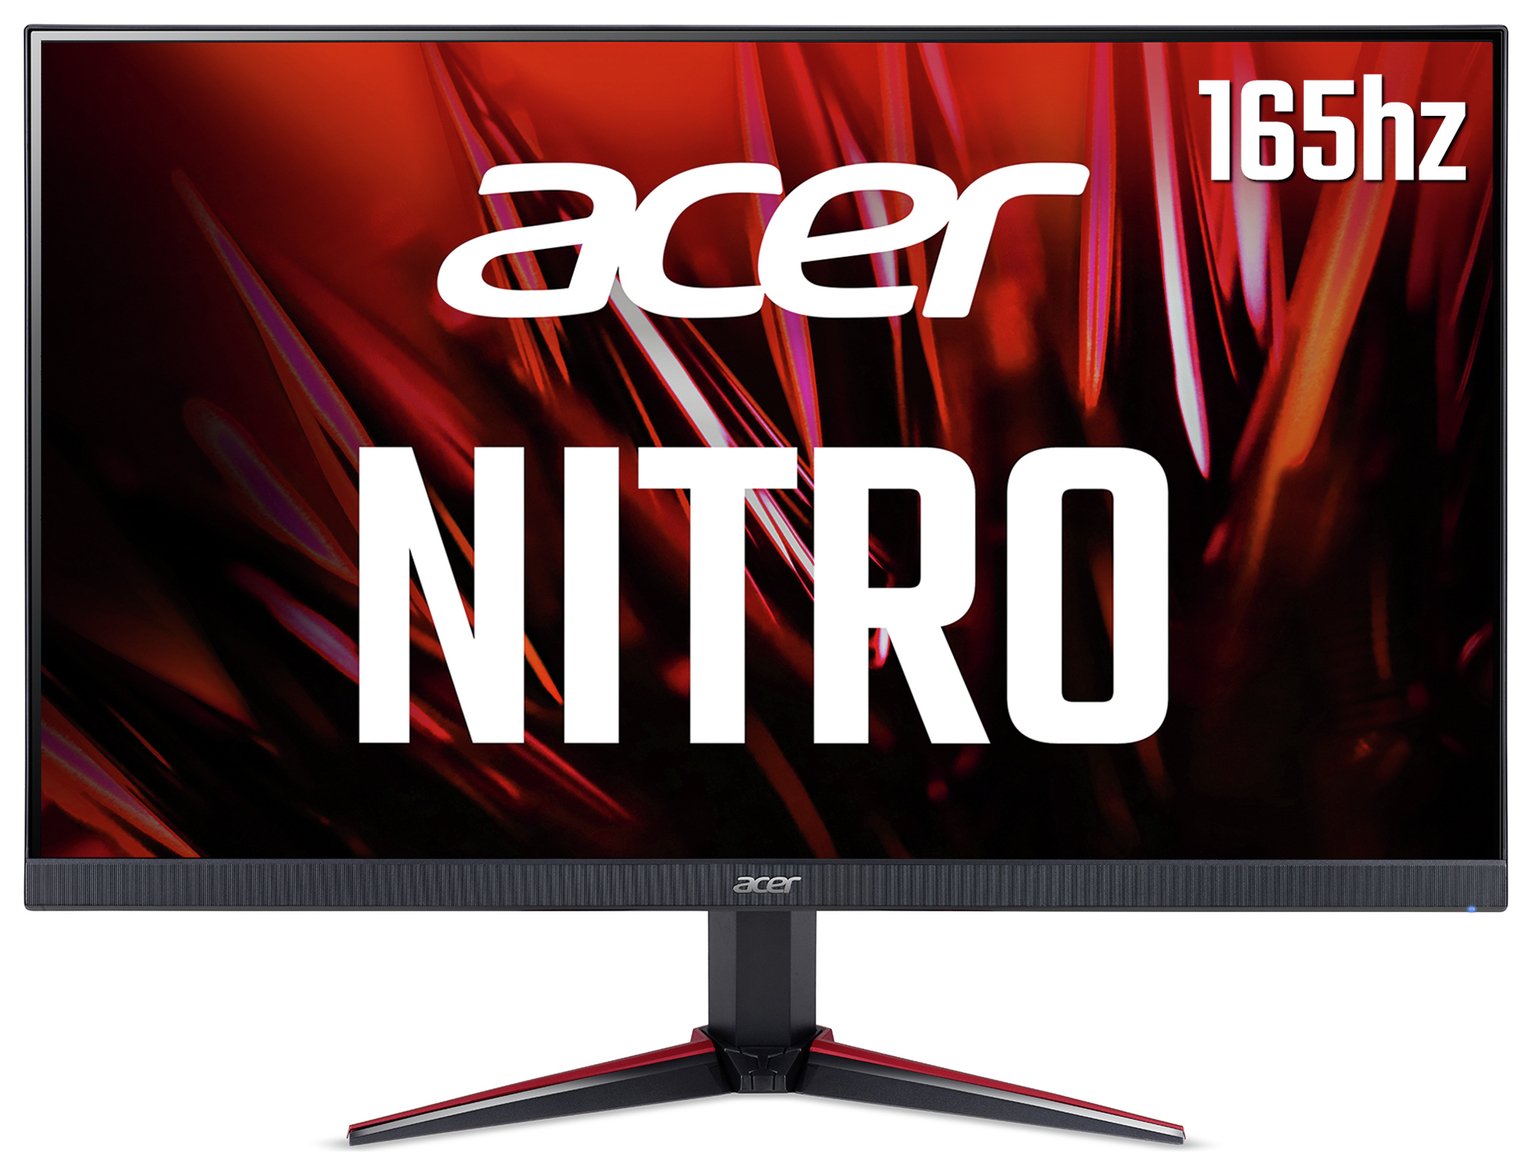 Acer Nitro VG240YS 24 Inch 165Hz FHD Gaming Monitor